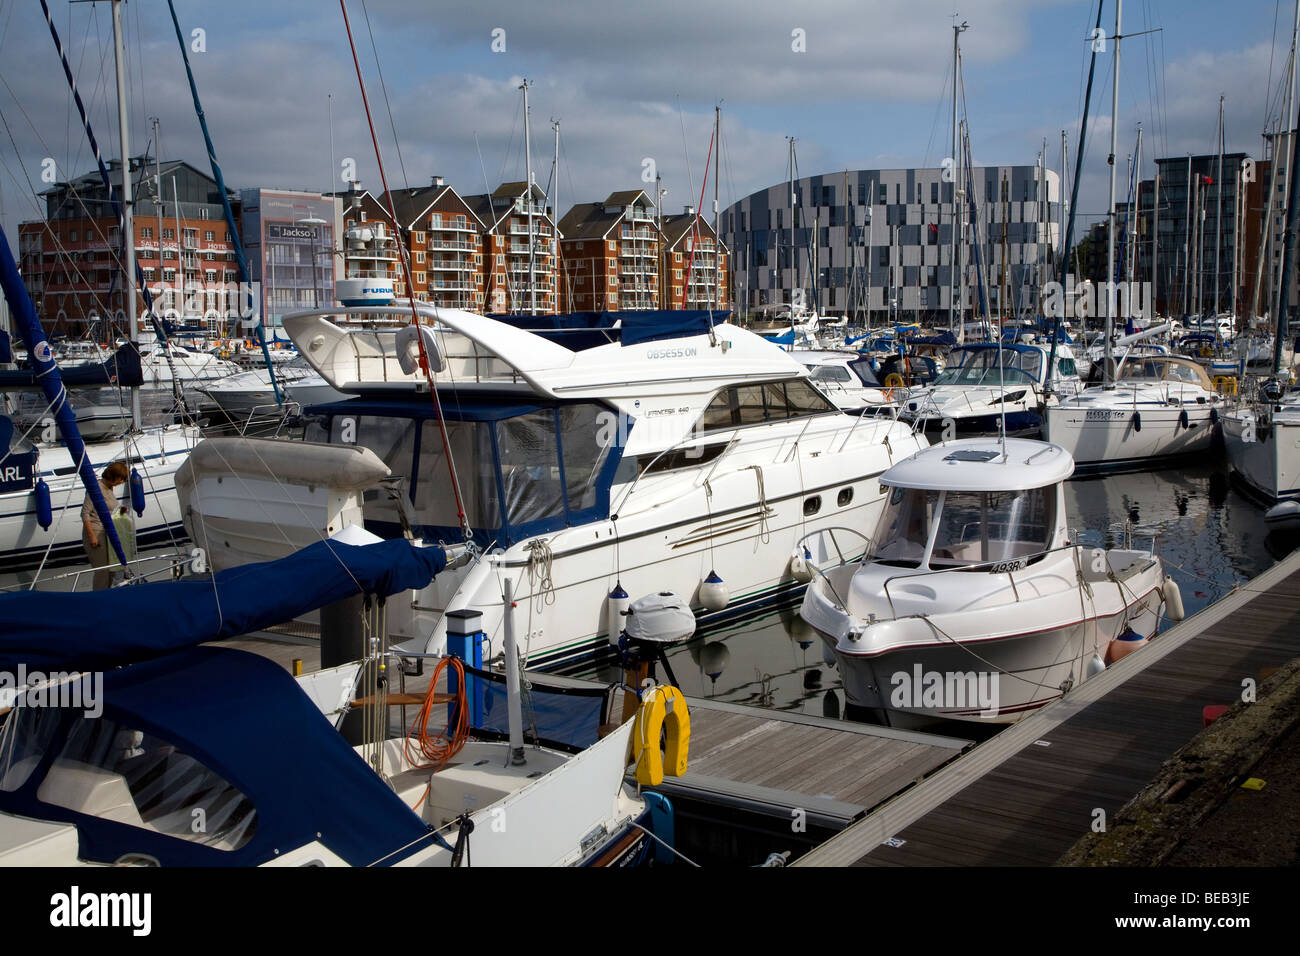 Boats in marina, Wet Dock, Ipswich, Suffolk, England Stock Photo